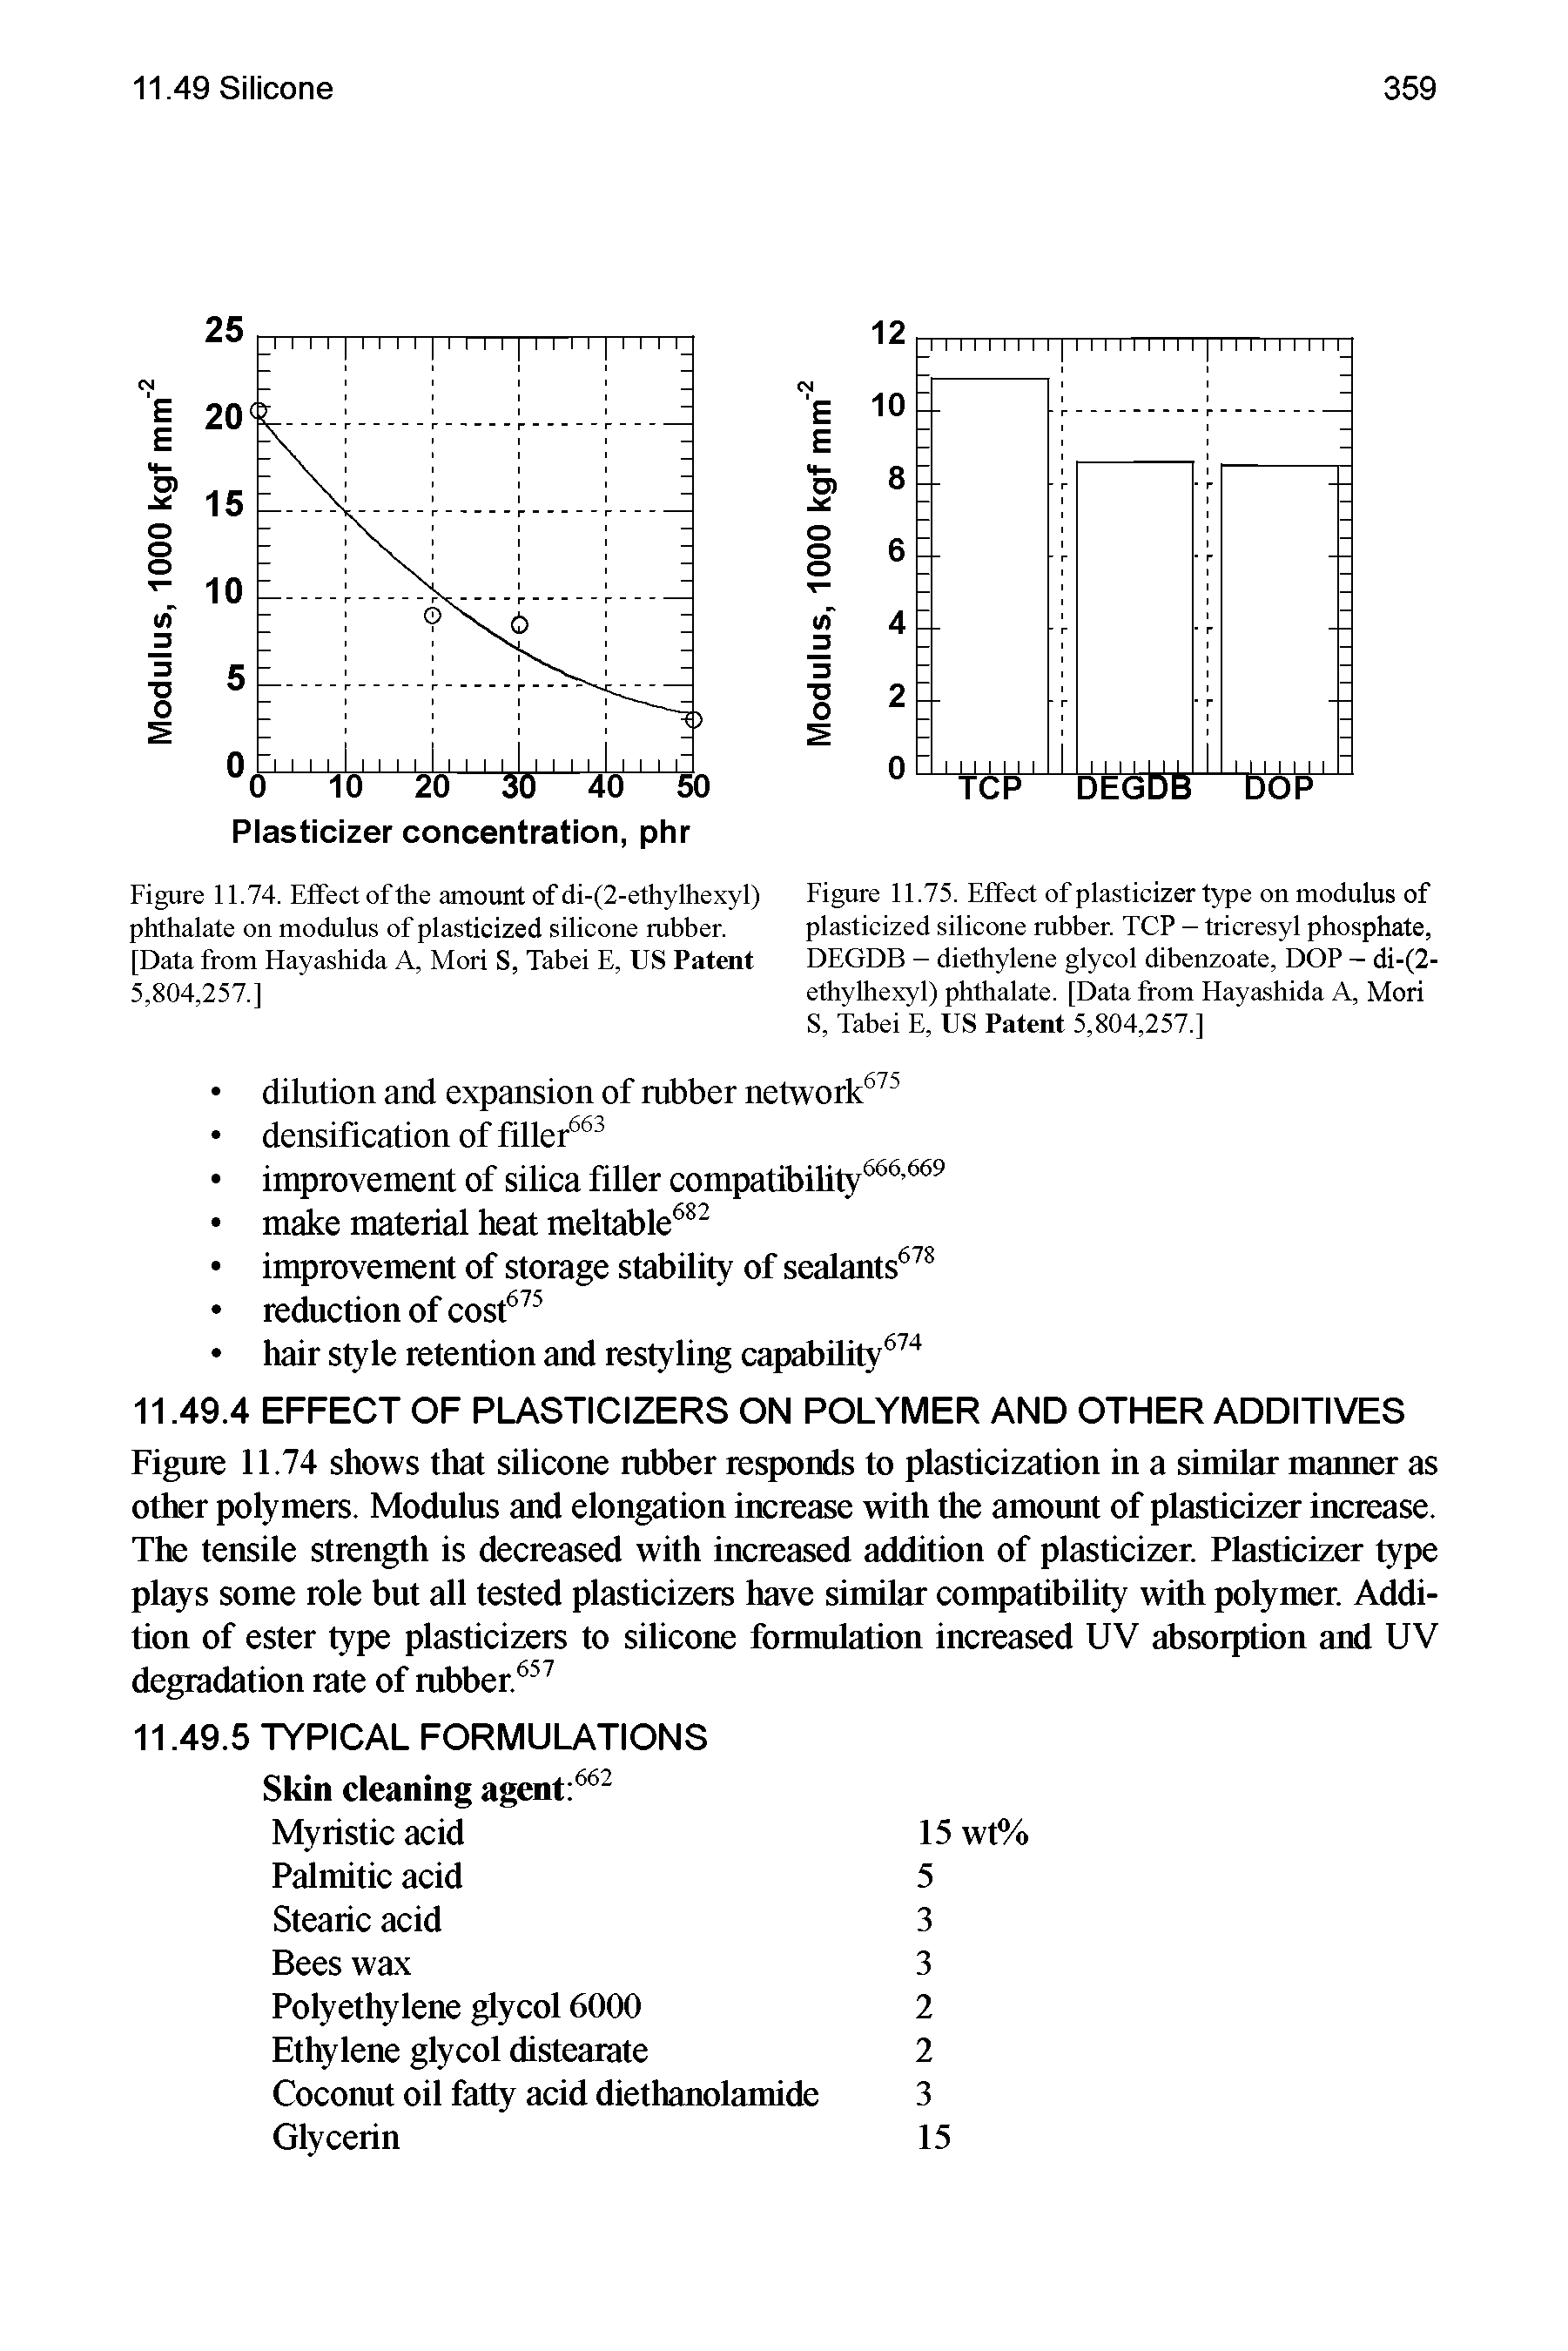 Figure 11.75. Effect of plasticizer type on modulus of plasticized silicone rubber. TCP - tricresyl phosphate, DEGDB - diethylene glycol dibenzoate, DOP - di-(2-ethylhexyl) phthalate. [Data from Hayashida A, Mori S, Tabei E, US Patent 5,804,257.]...